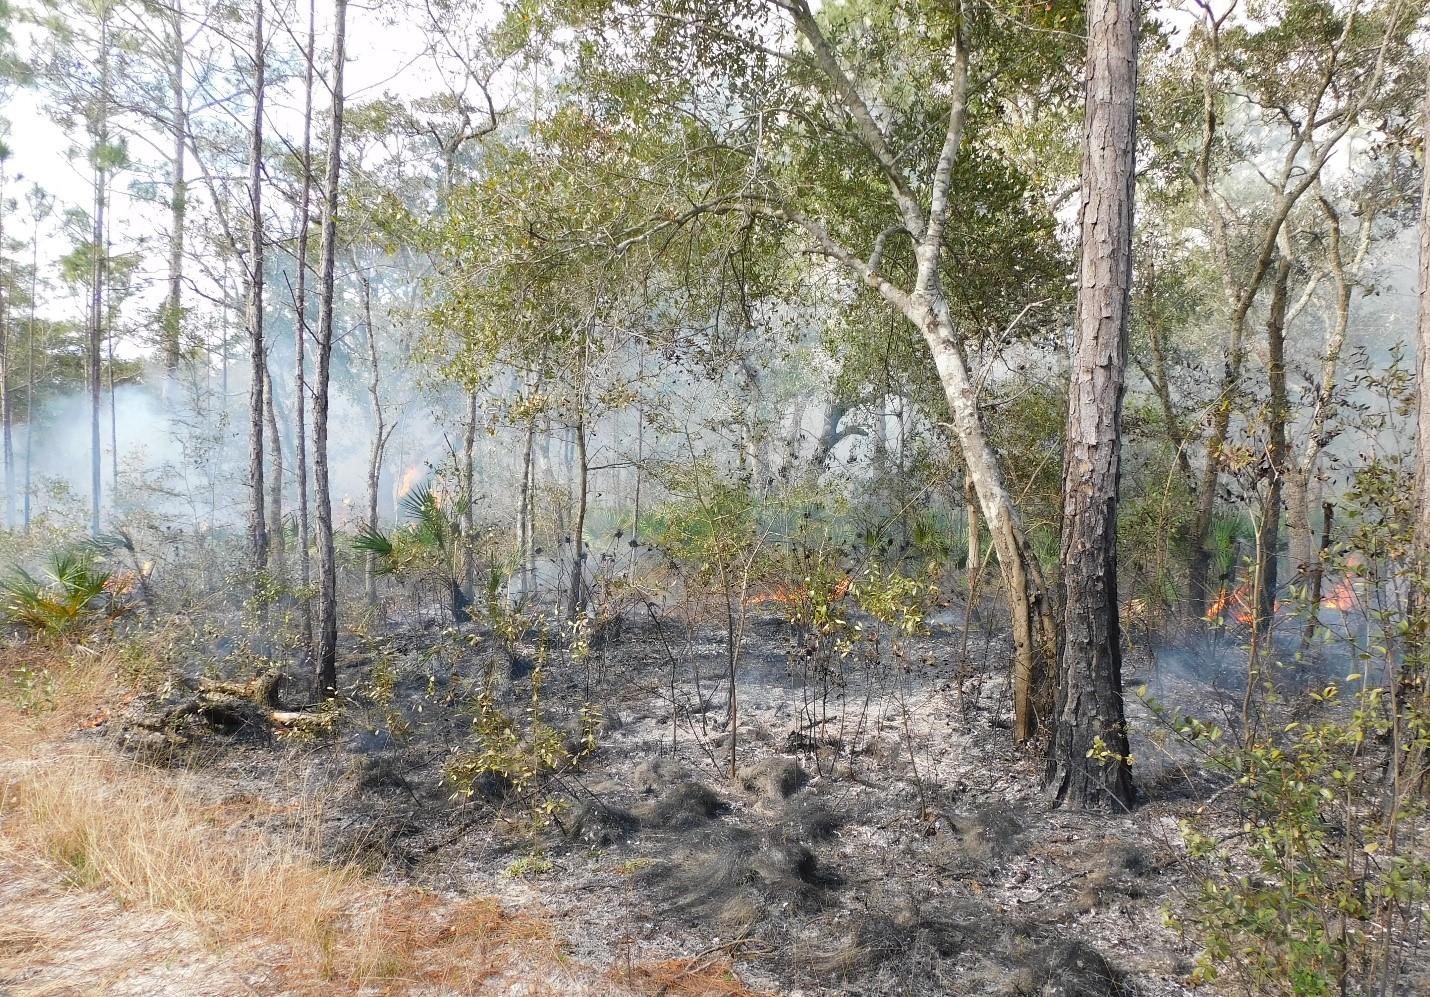 Successful Prescribed Burn at Jones Swamp Wetland Preserve in January 2022. Picture courtesy of Samantha Bolduc